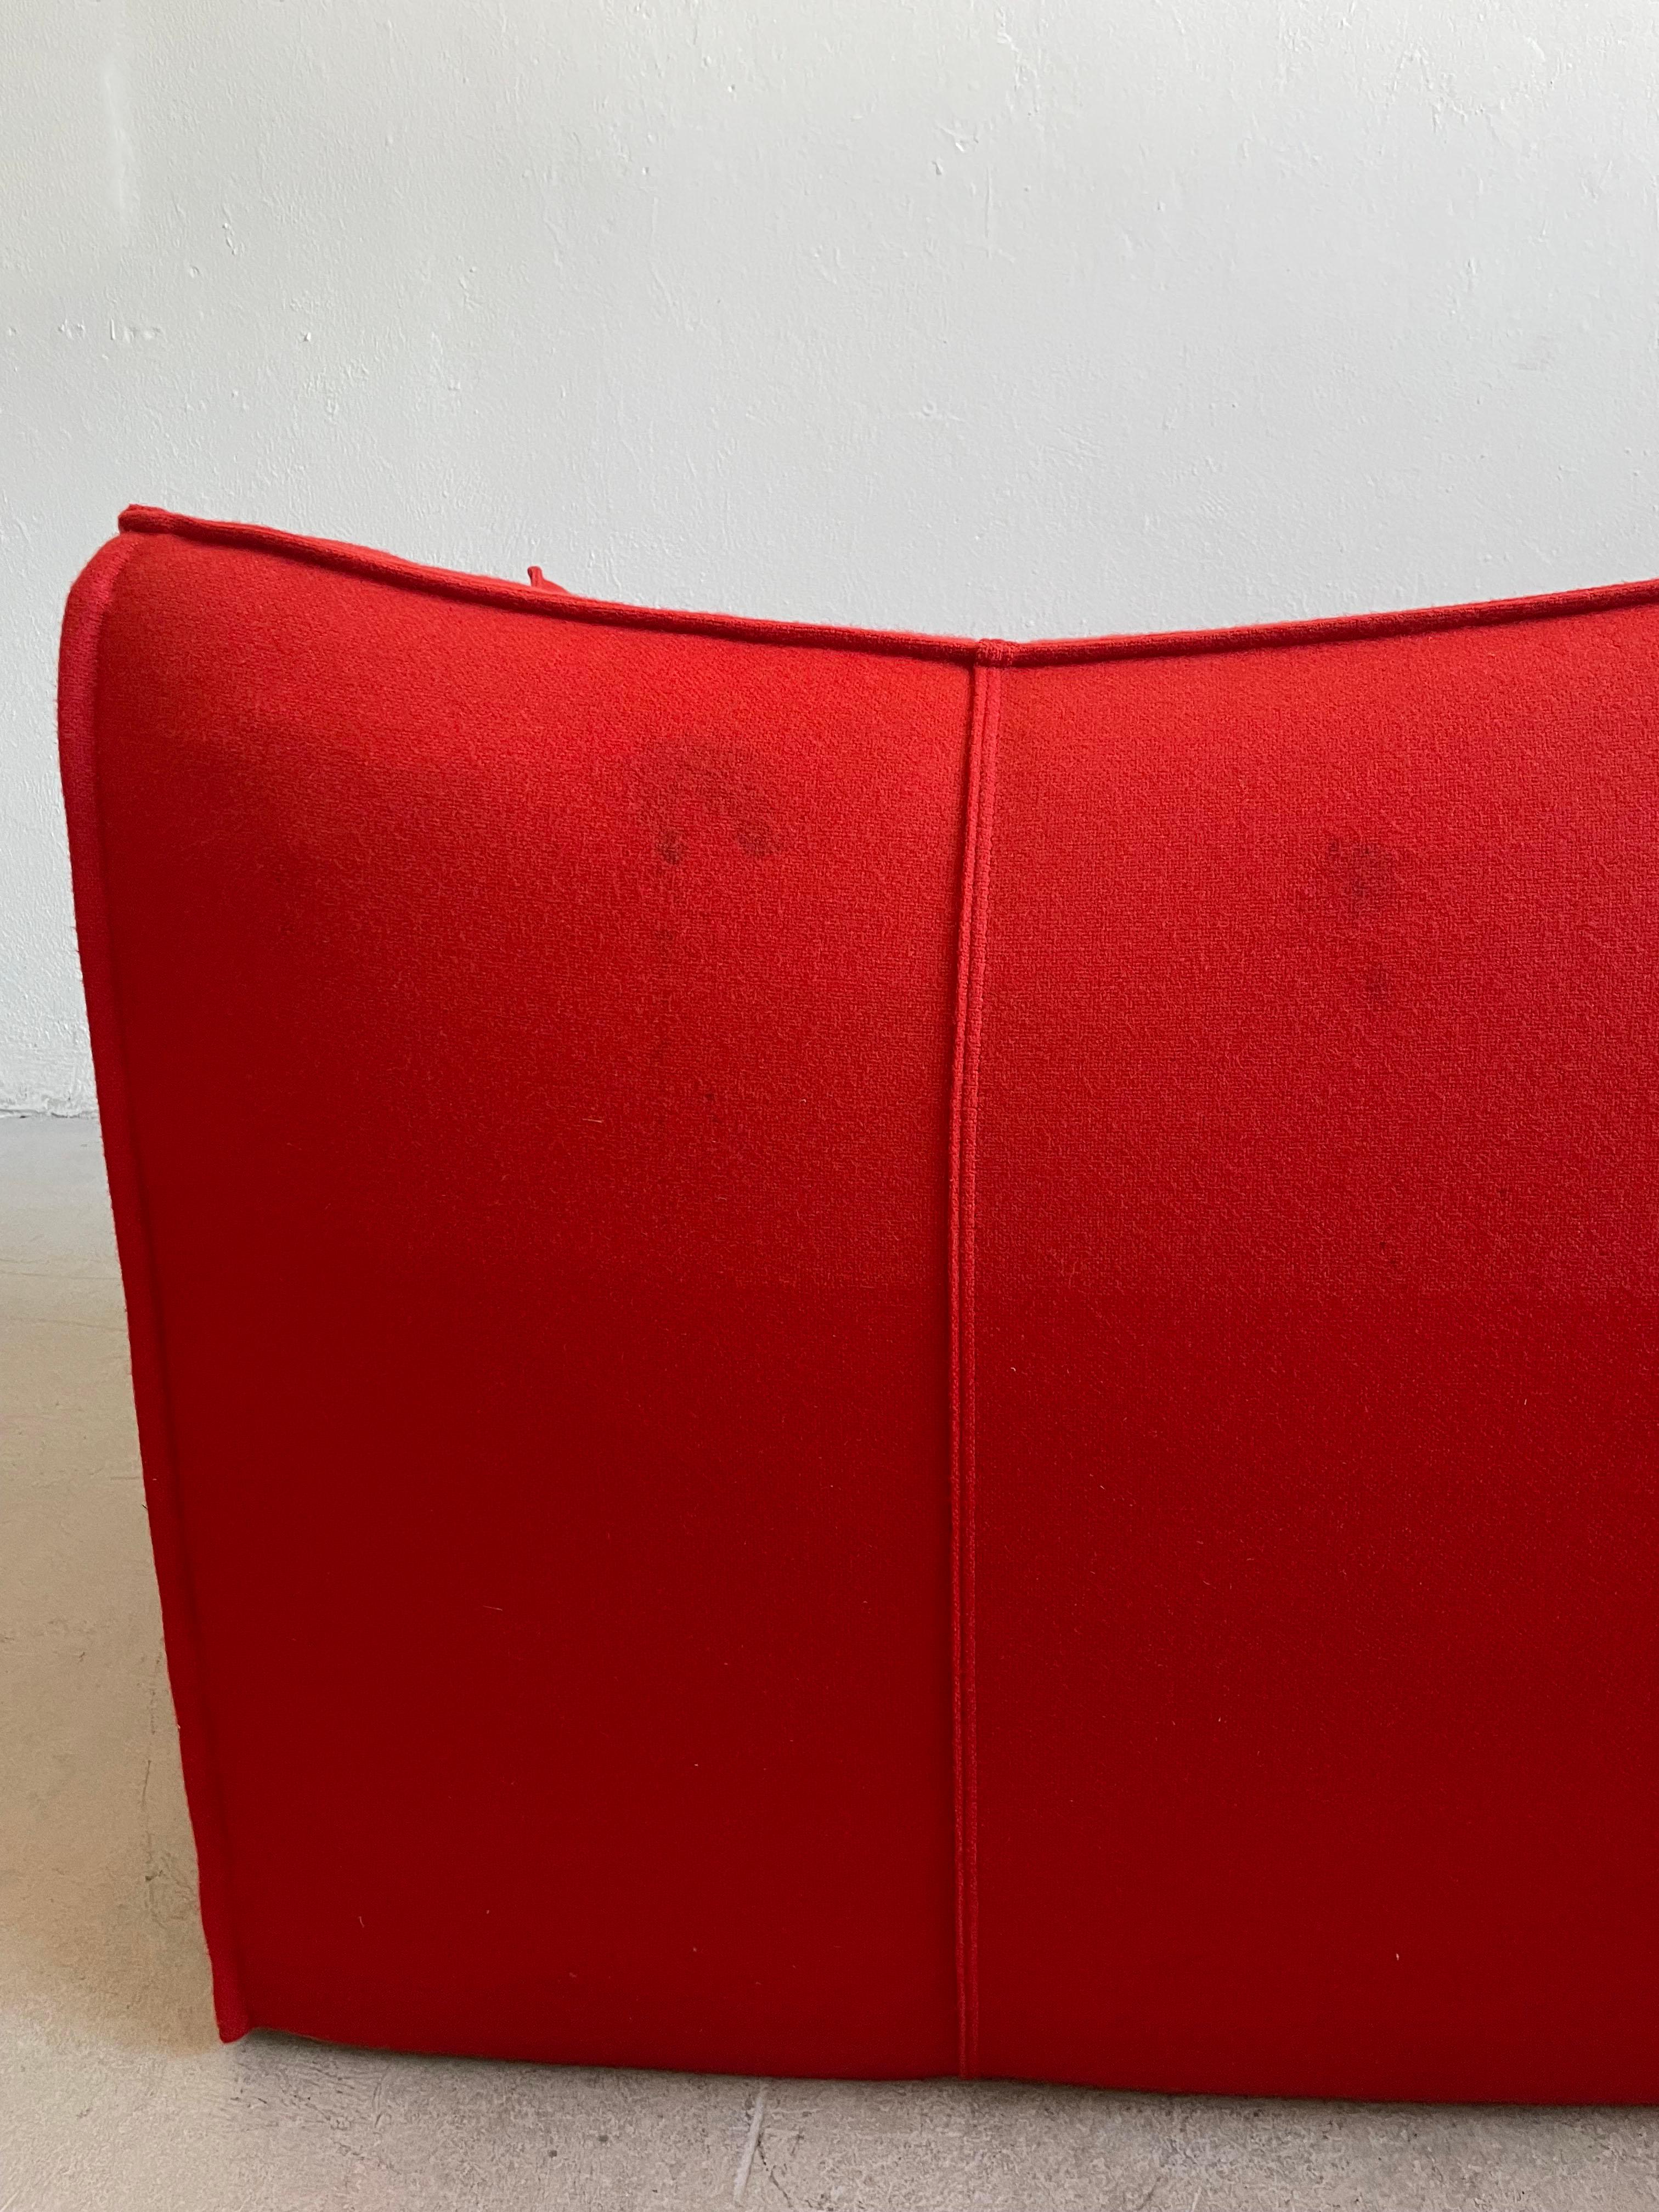 Mario Bellini Le Bambole '07 Sofa B&B Italia in Red Wool, Removable Cover (Canapé Le Bambole '07 B&B Italia en laine rouge, couverture amovible) en vente 4